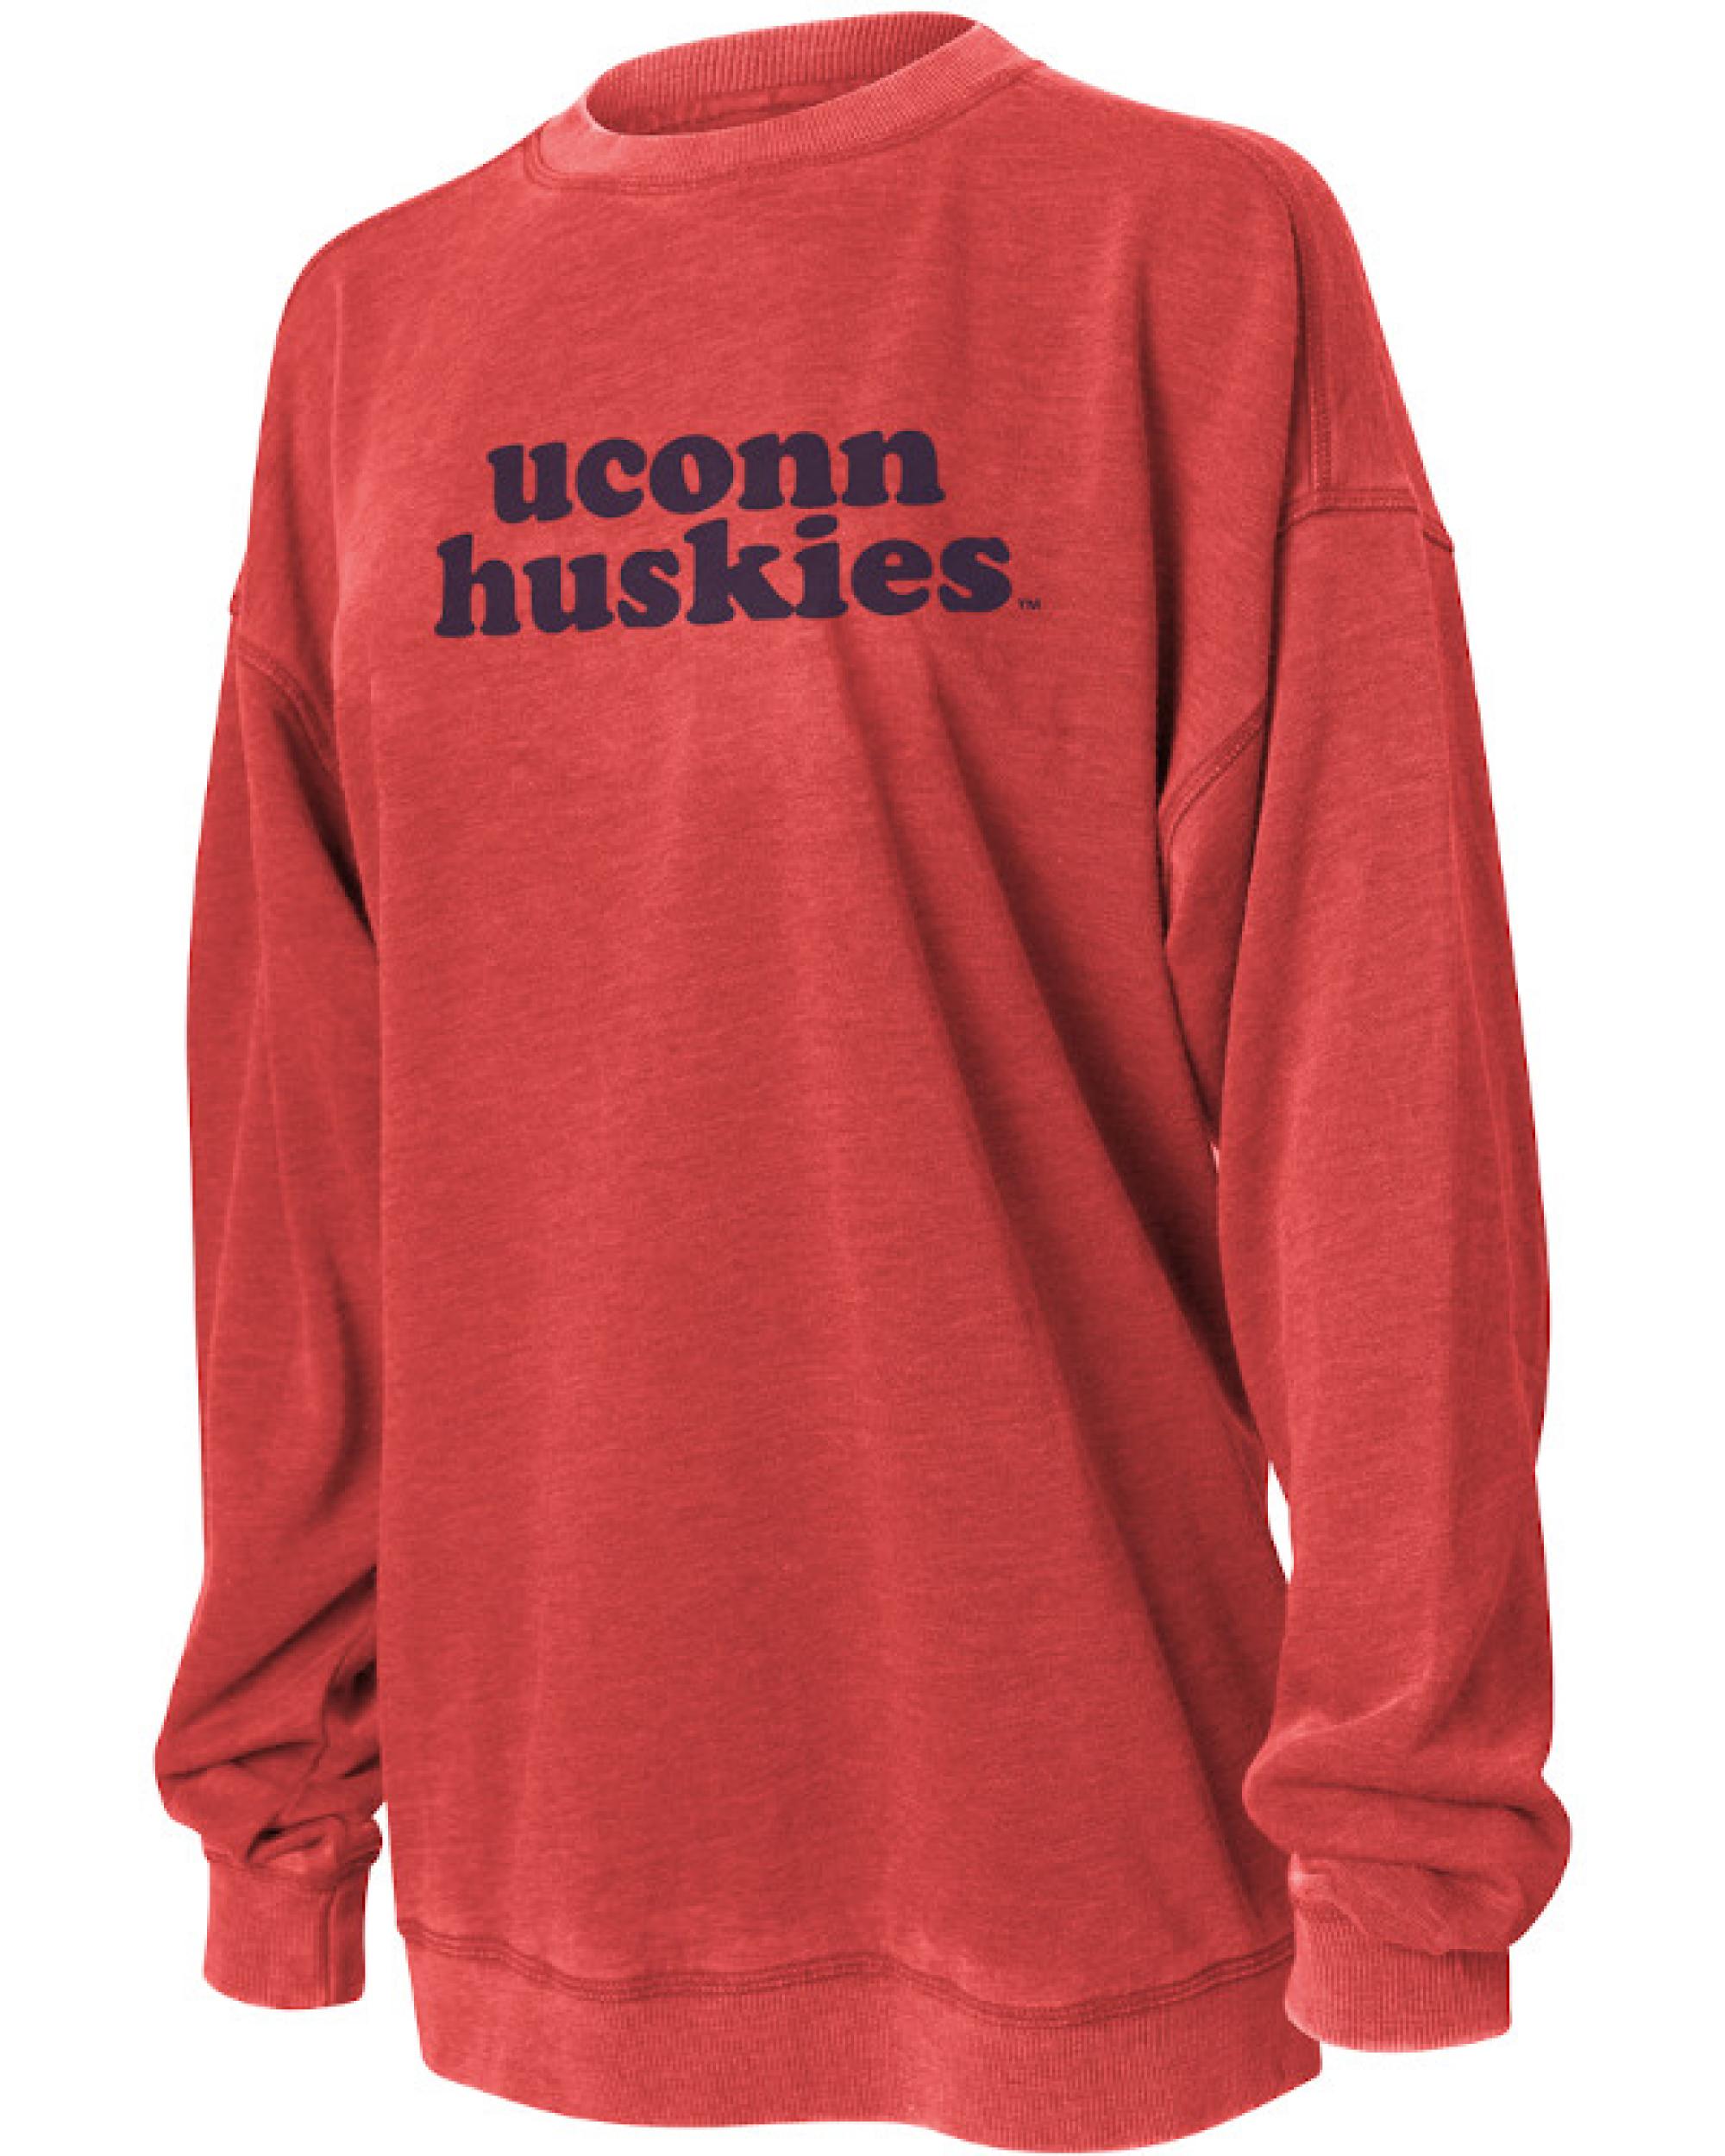 uconn women's sweatshirt